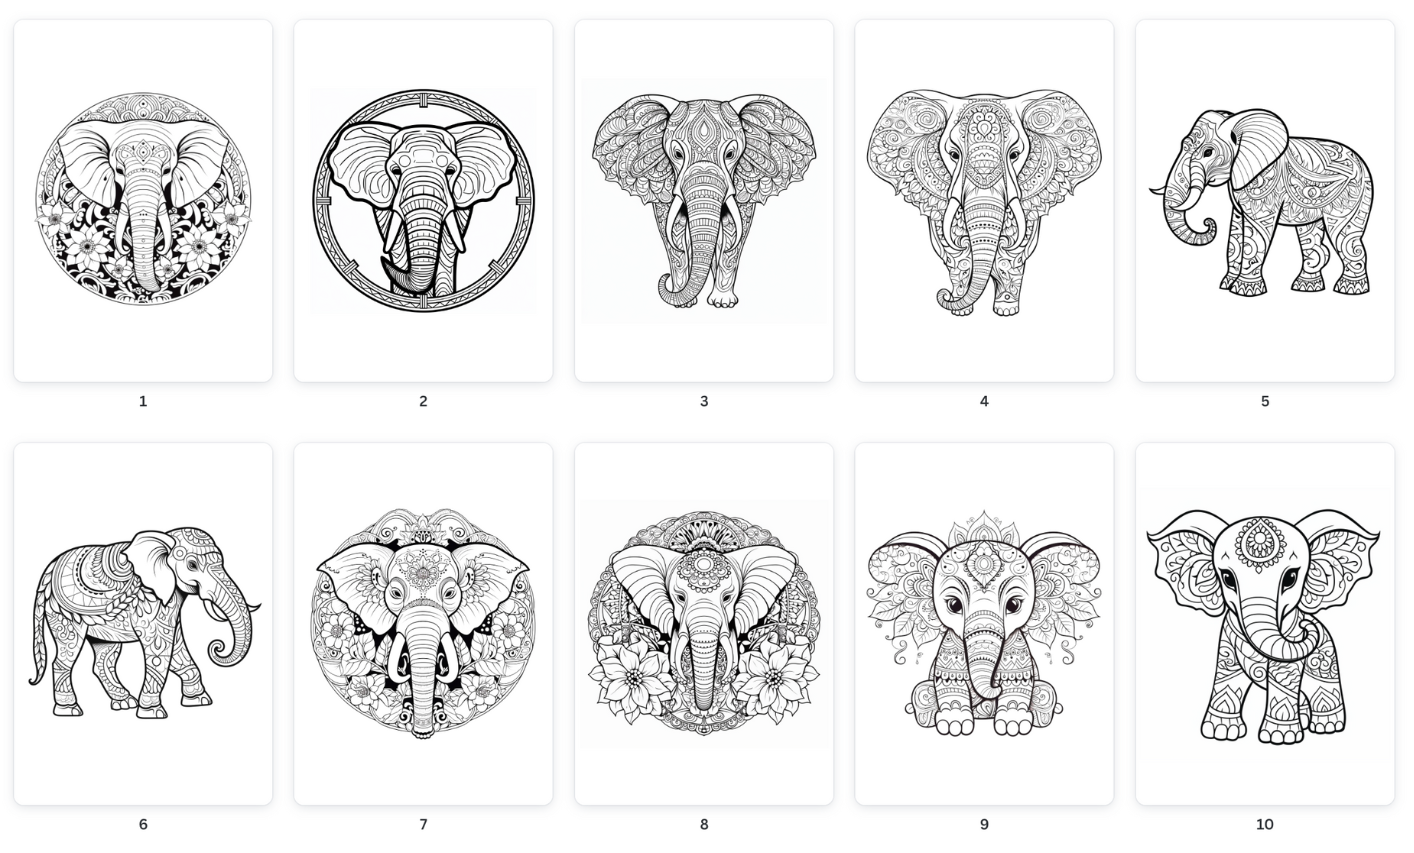 Elephant mandala coloring pages â store